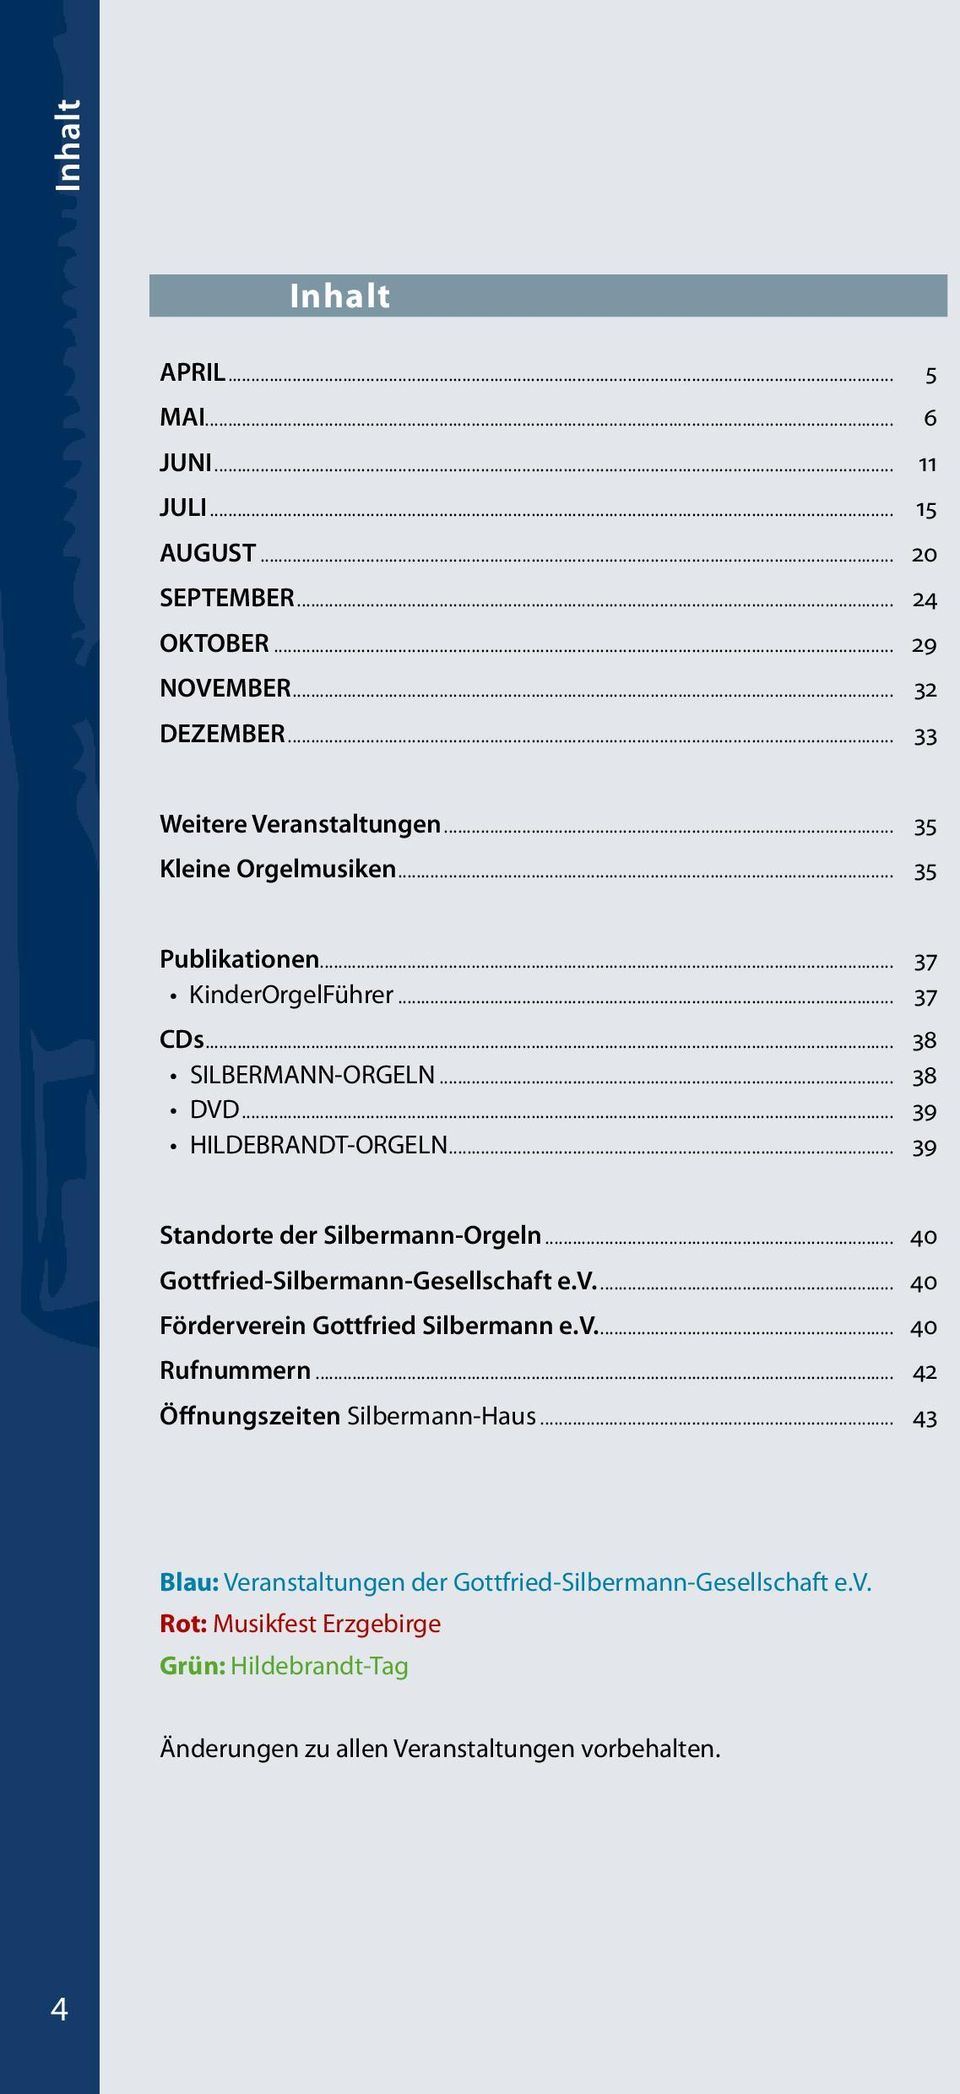 .. 39 Standorte der Silbermann-Orgeln... 40 Gottfried-Silbermann-Gesellschaft e.v... 40 Förderverein Gottfried Silbermann e.v... 40 Rufnummern.